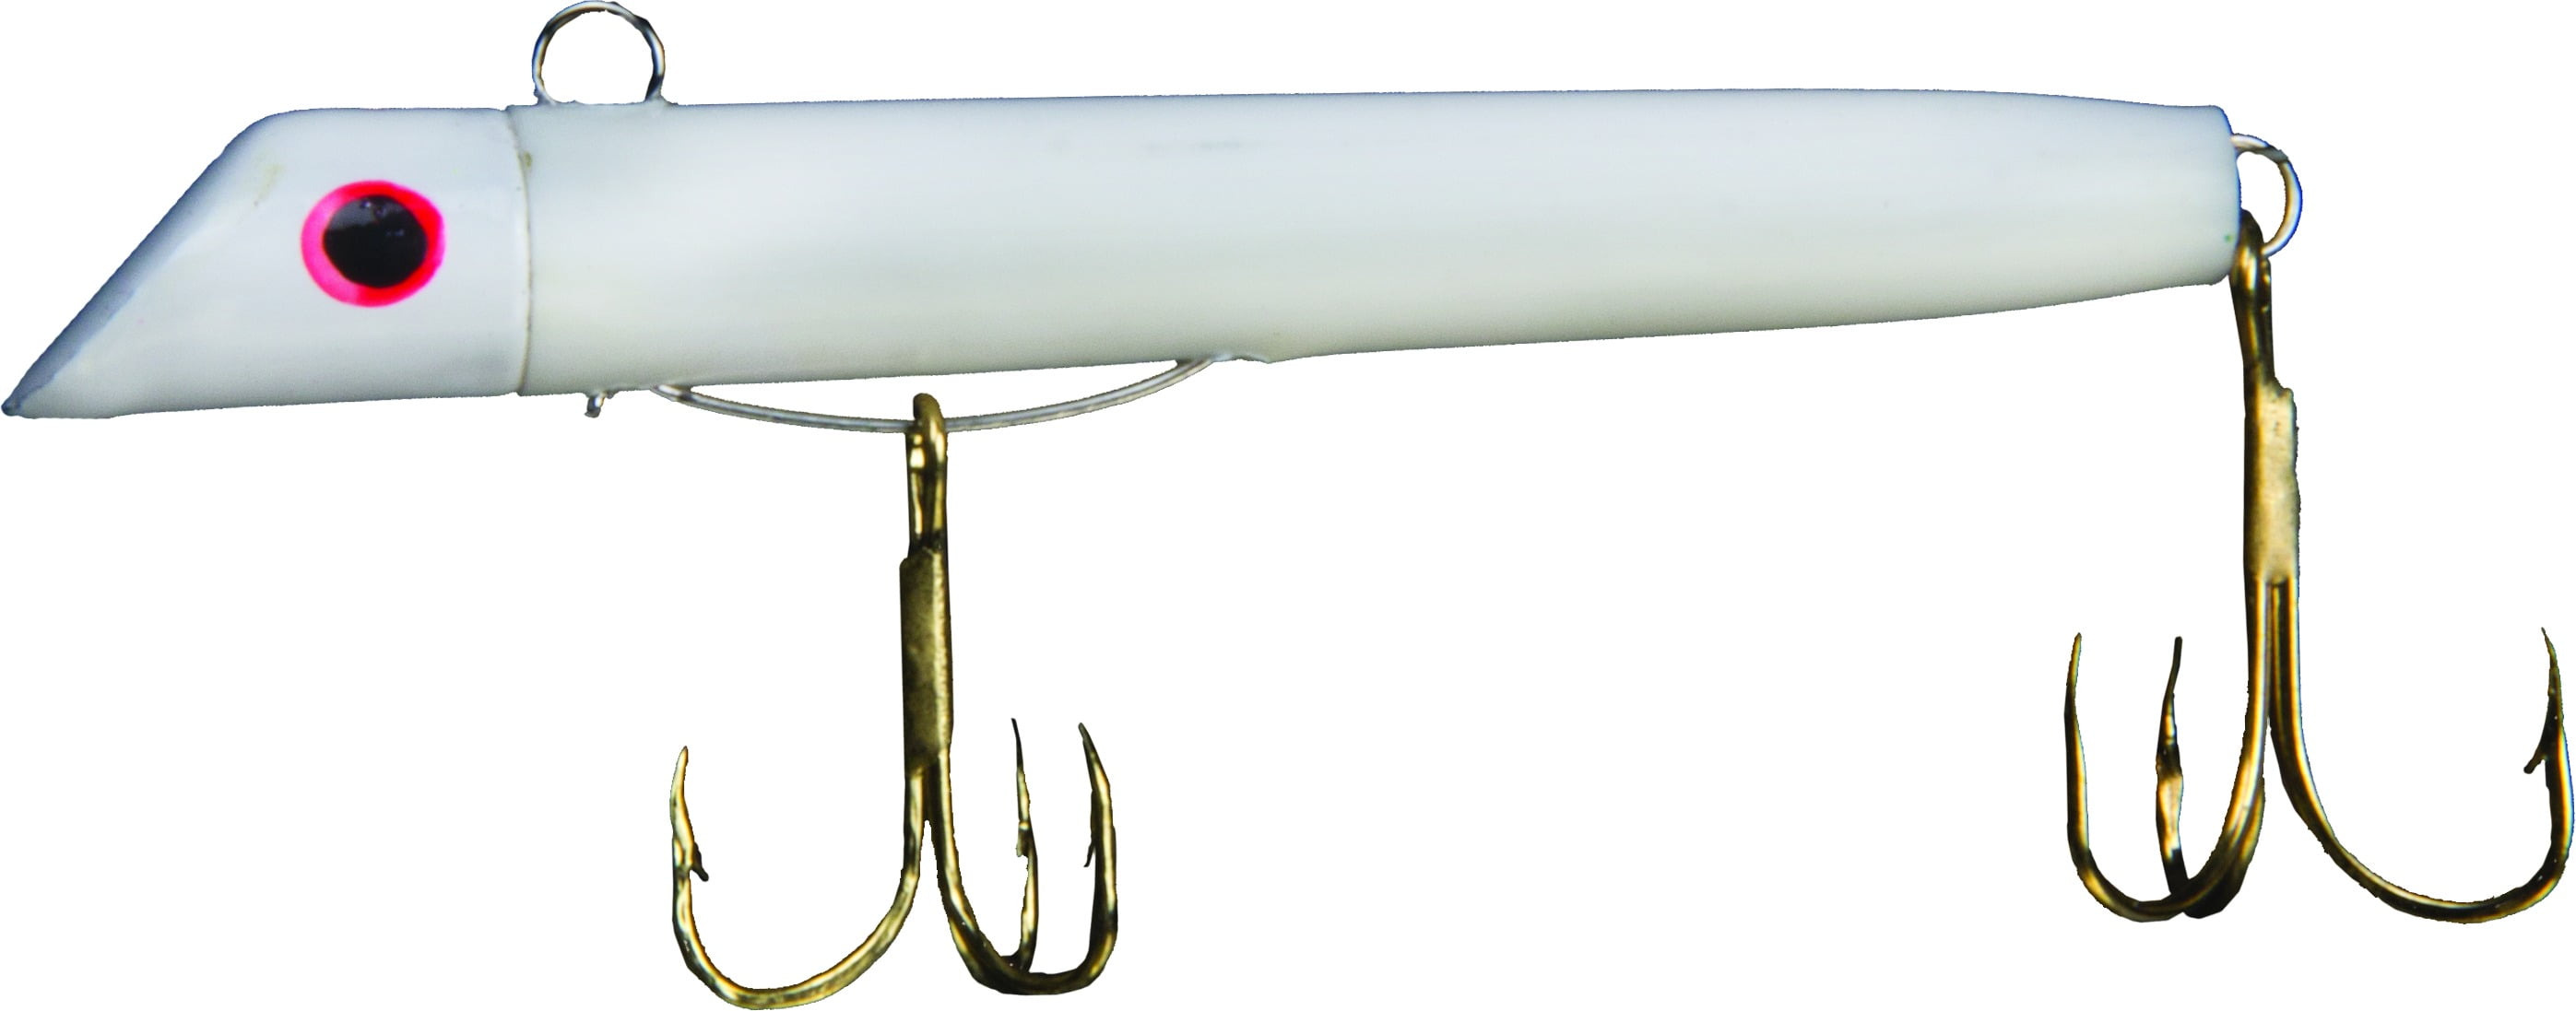 GOT-CHA 100 Series Fishing Plug Lure, White, 3, 1 Ounce 